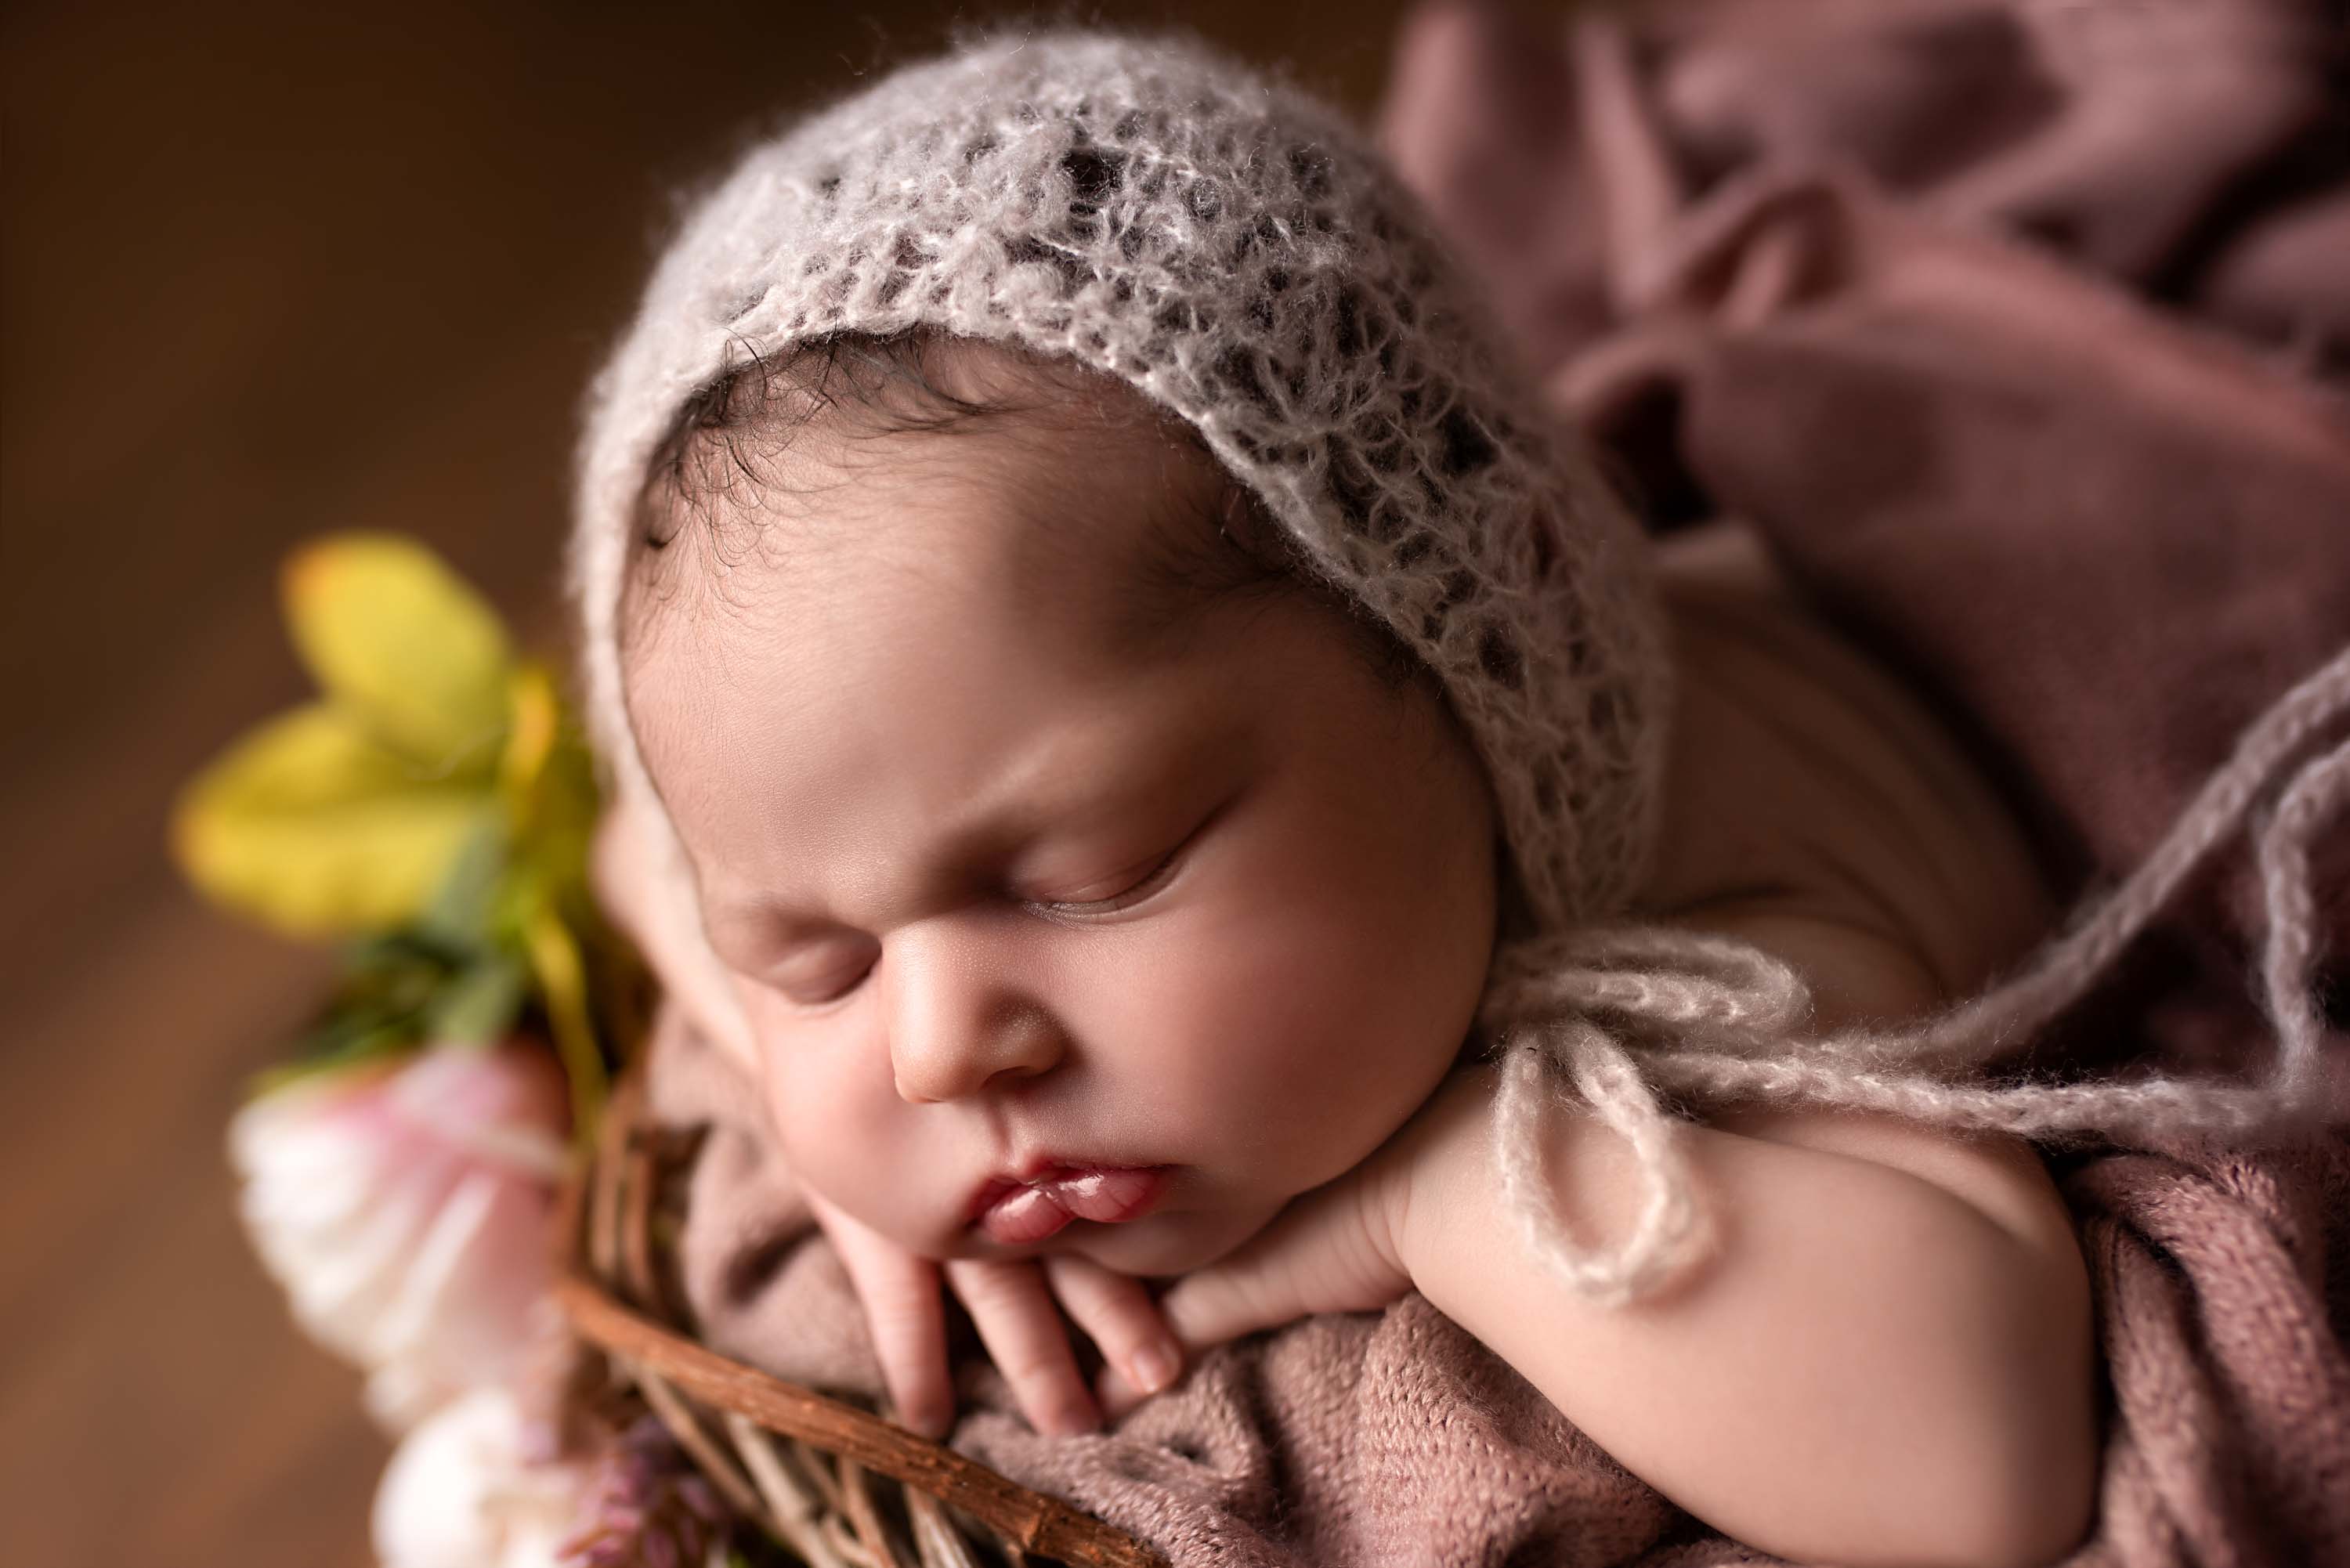 Newborn photography crocheted bonnet on a baby girl